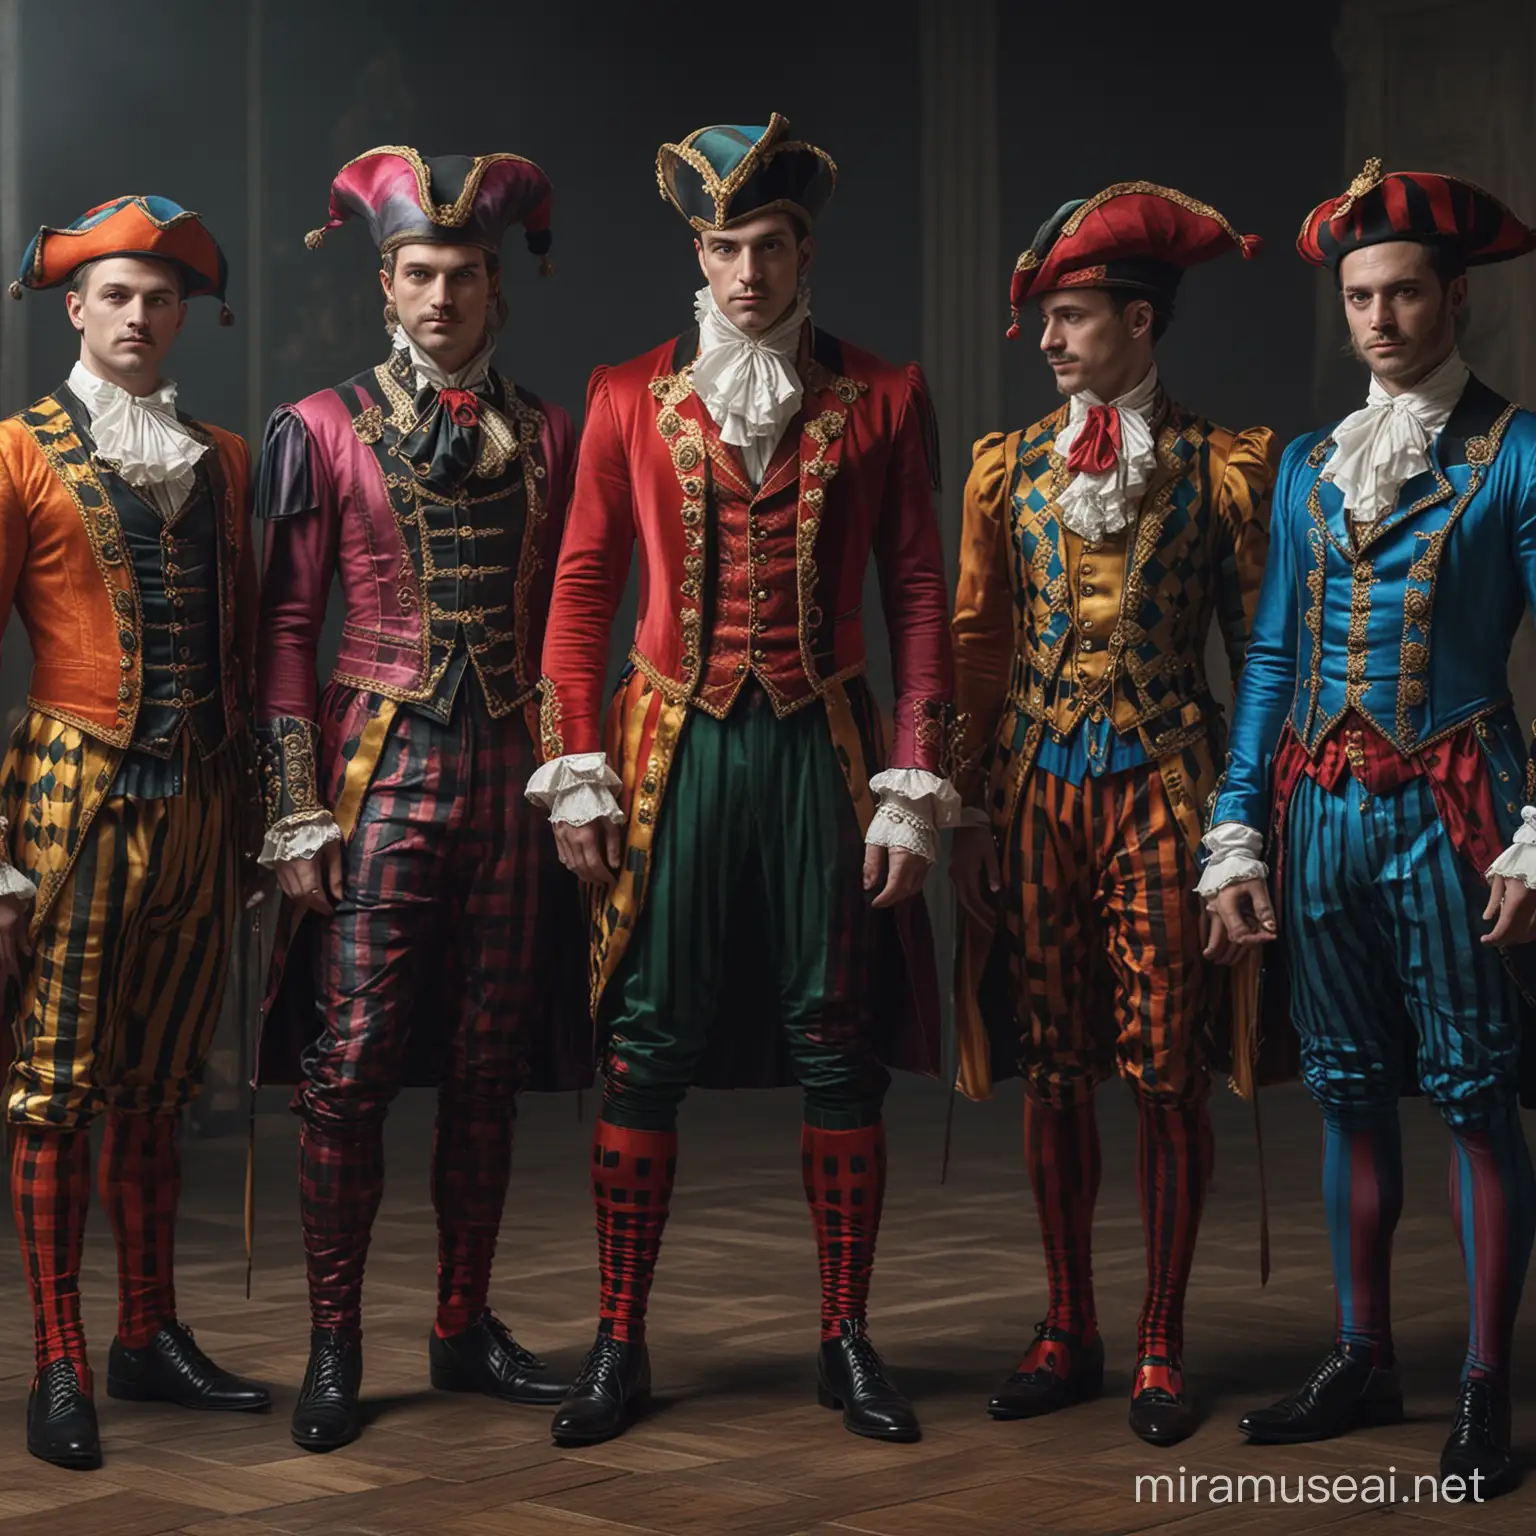 Elegant Aristocratic Men and Vibrant Harlequin Women in Realistic Photography